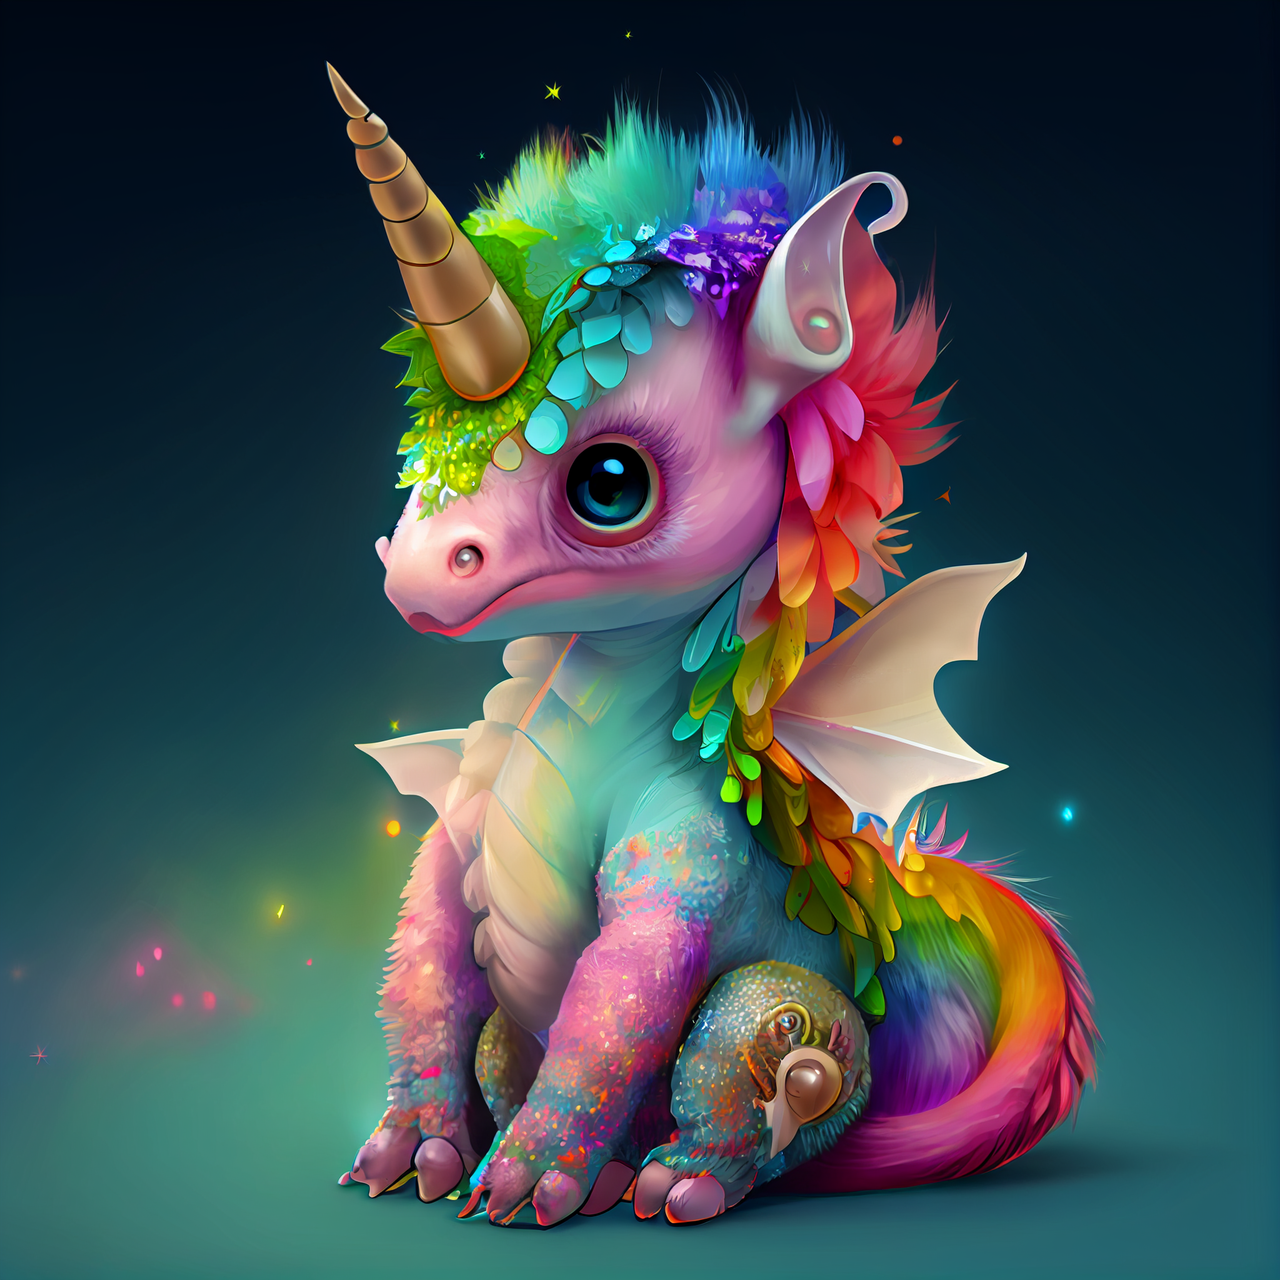 Cute Rainbow Baby Dragon – Made With AI